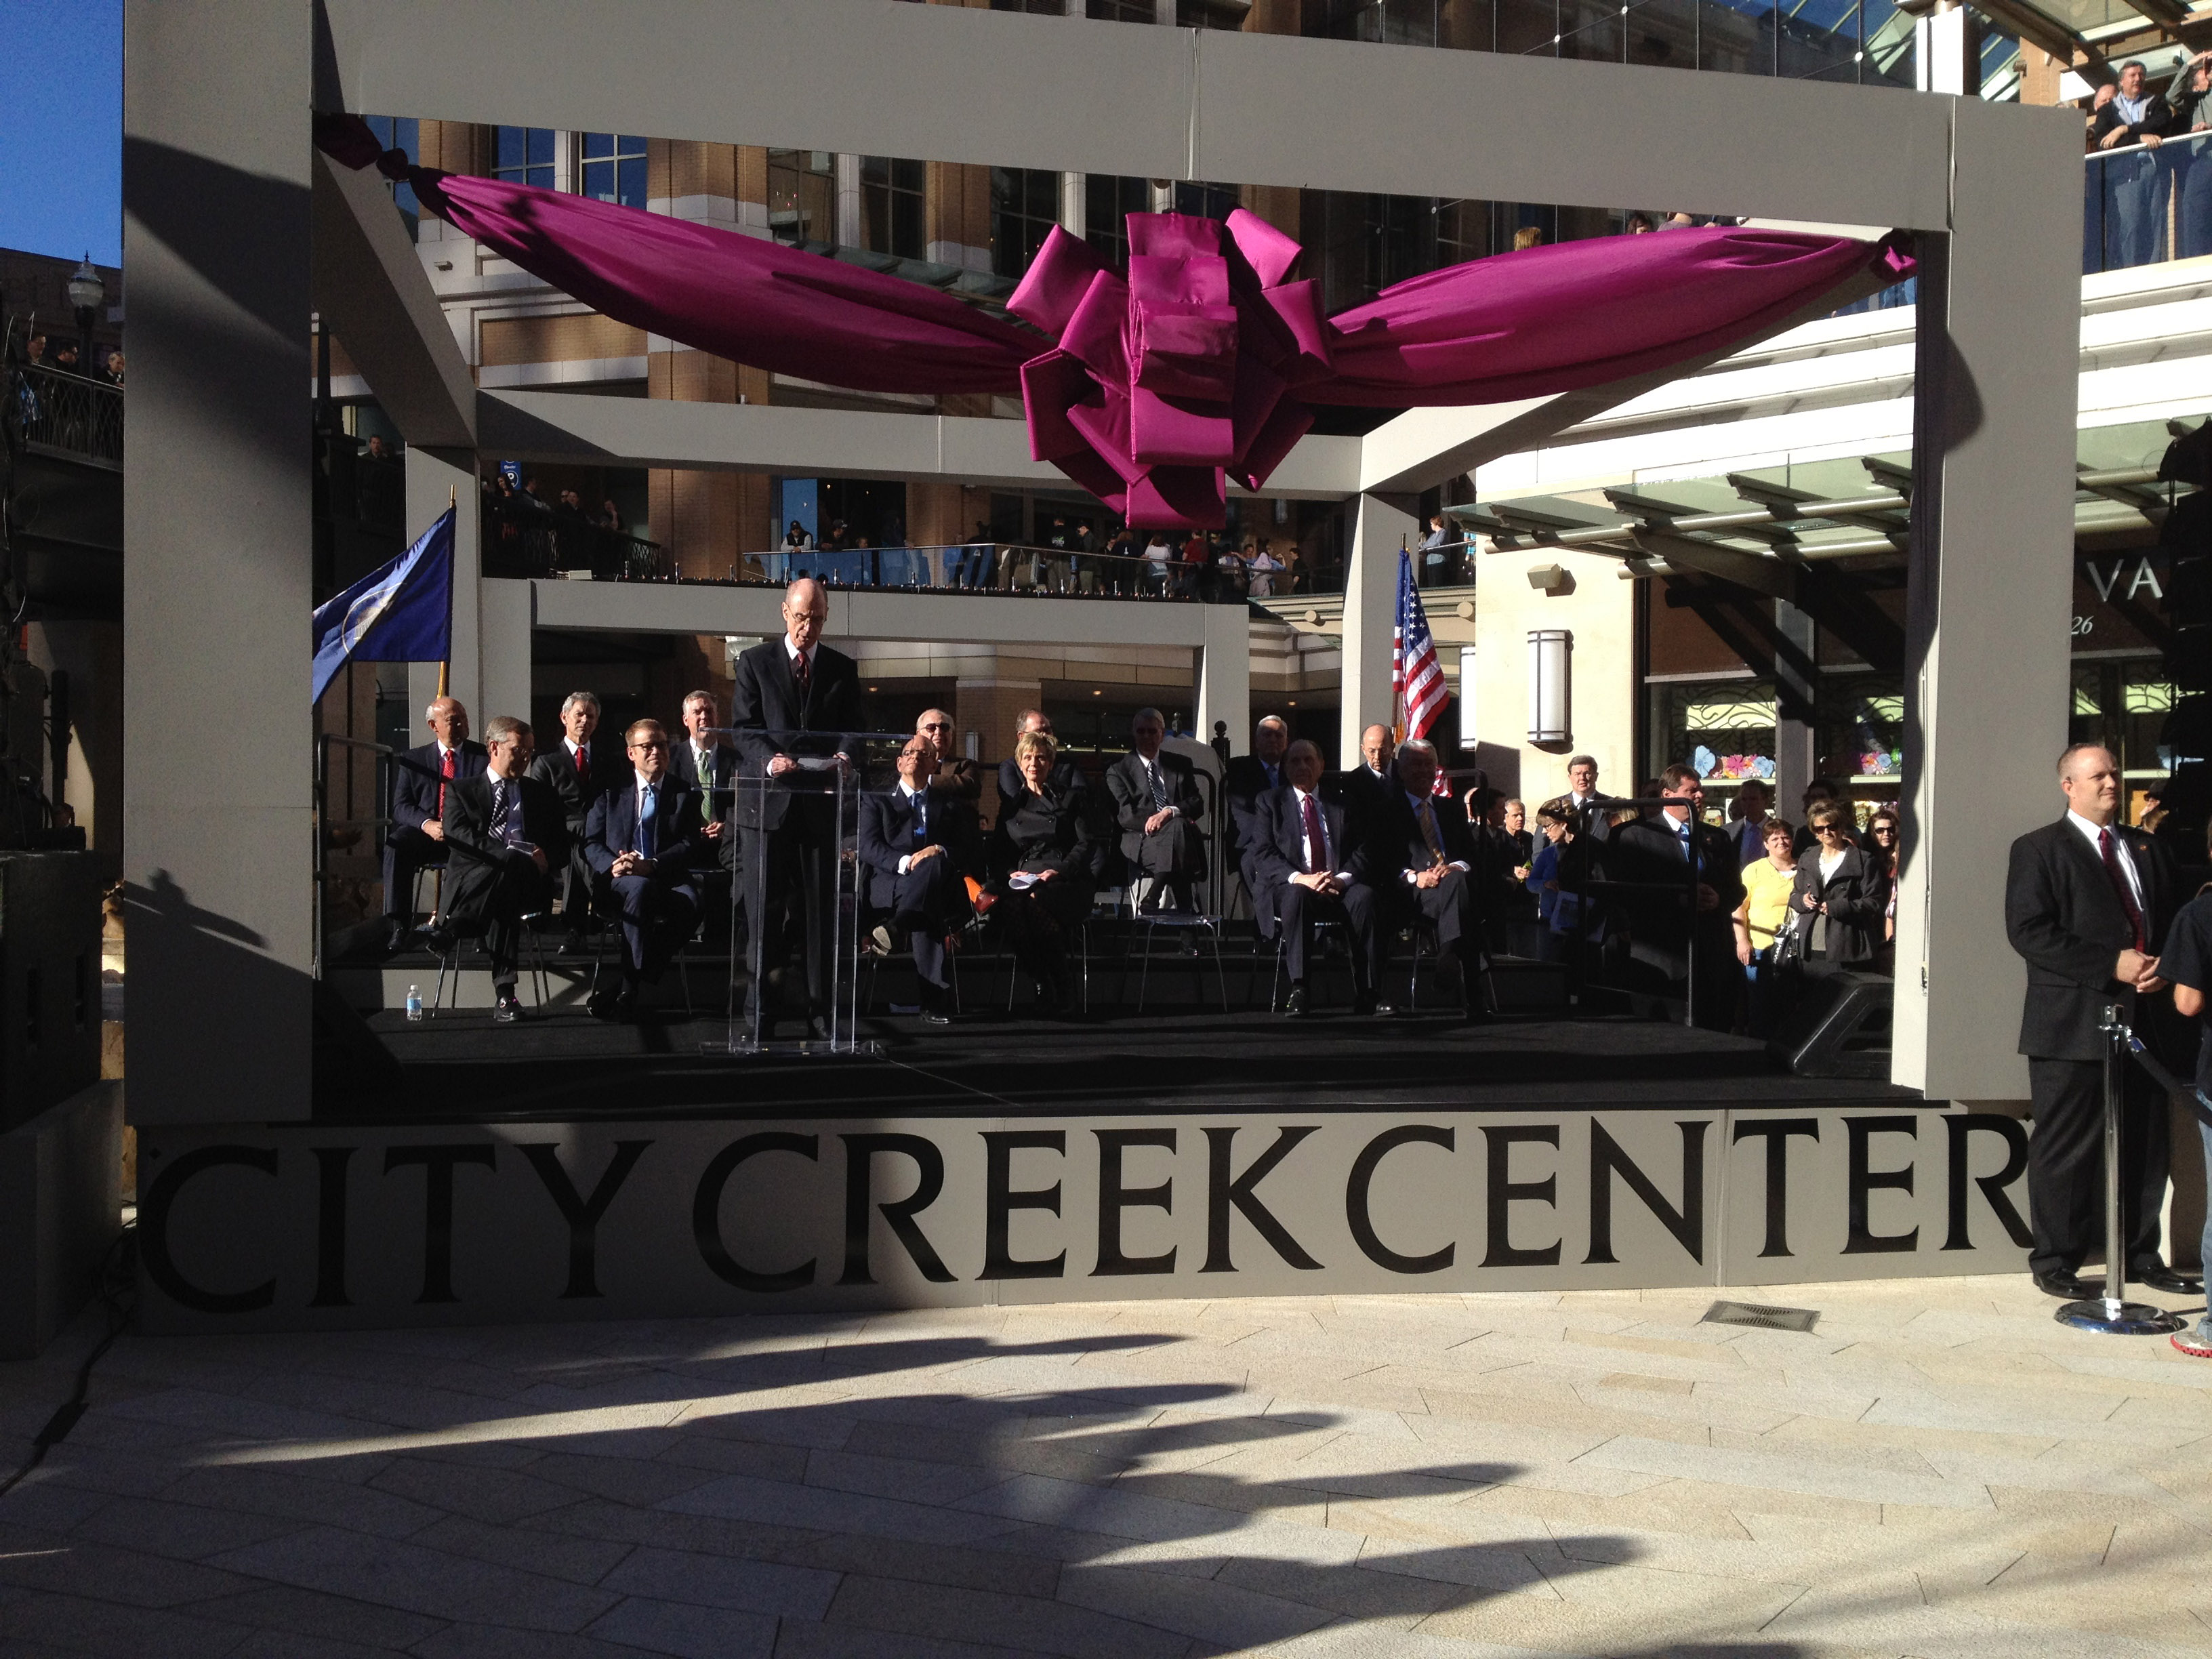 City Creek Center Opens